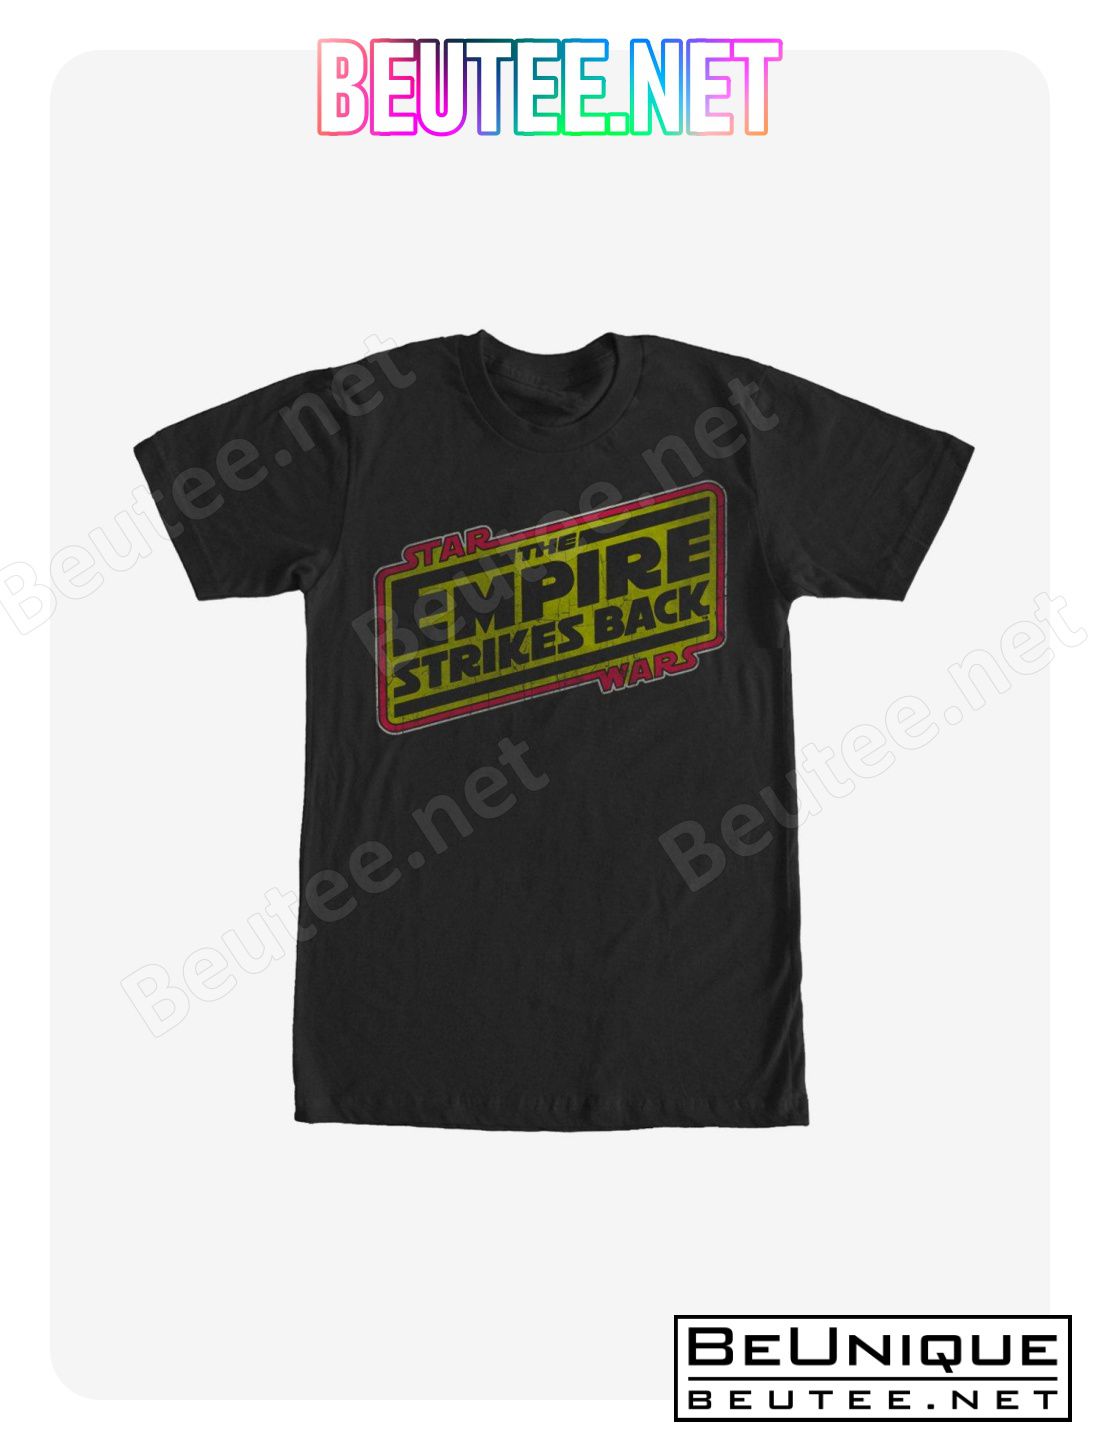 Star Wars Episode V The Empire Strikes Back Logo T-Shirt